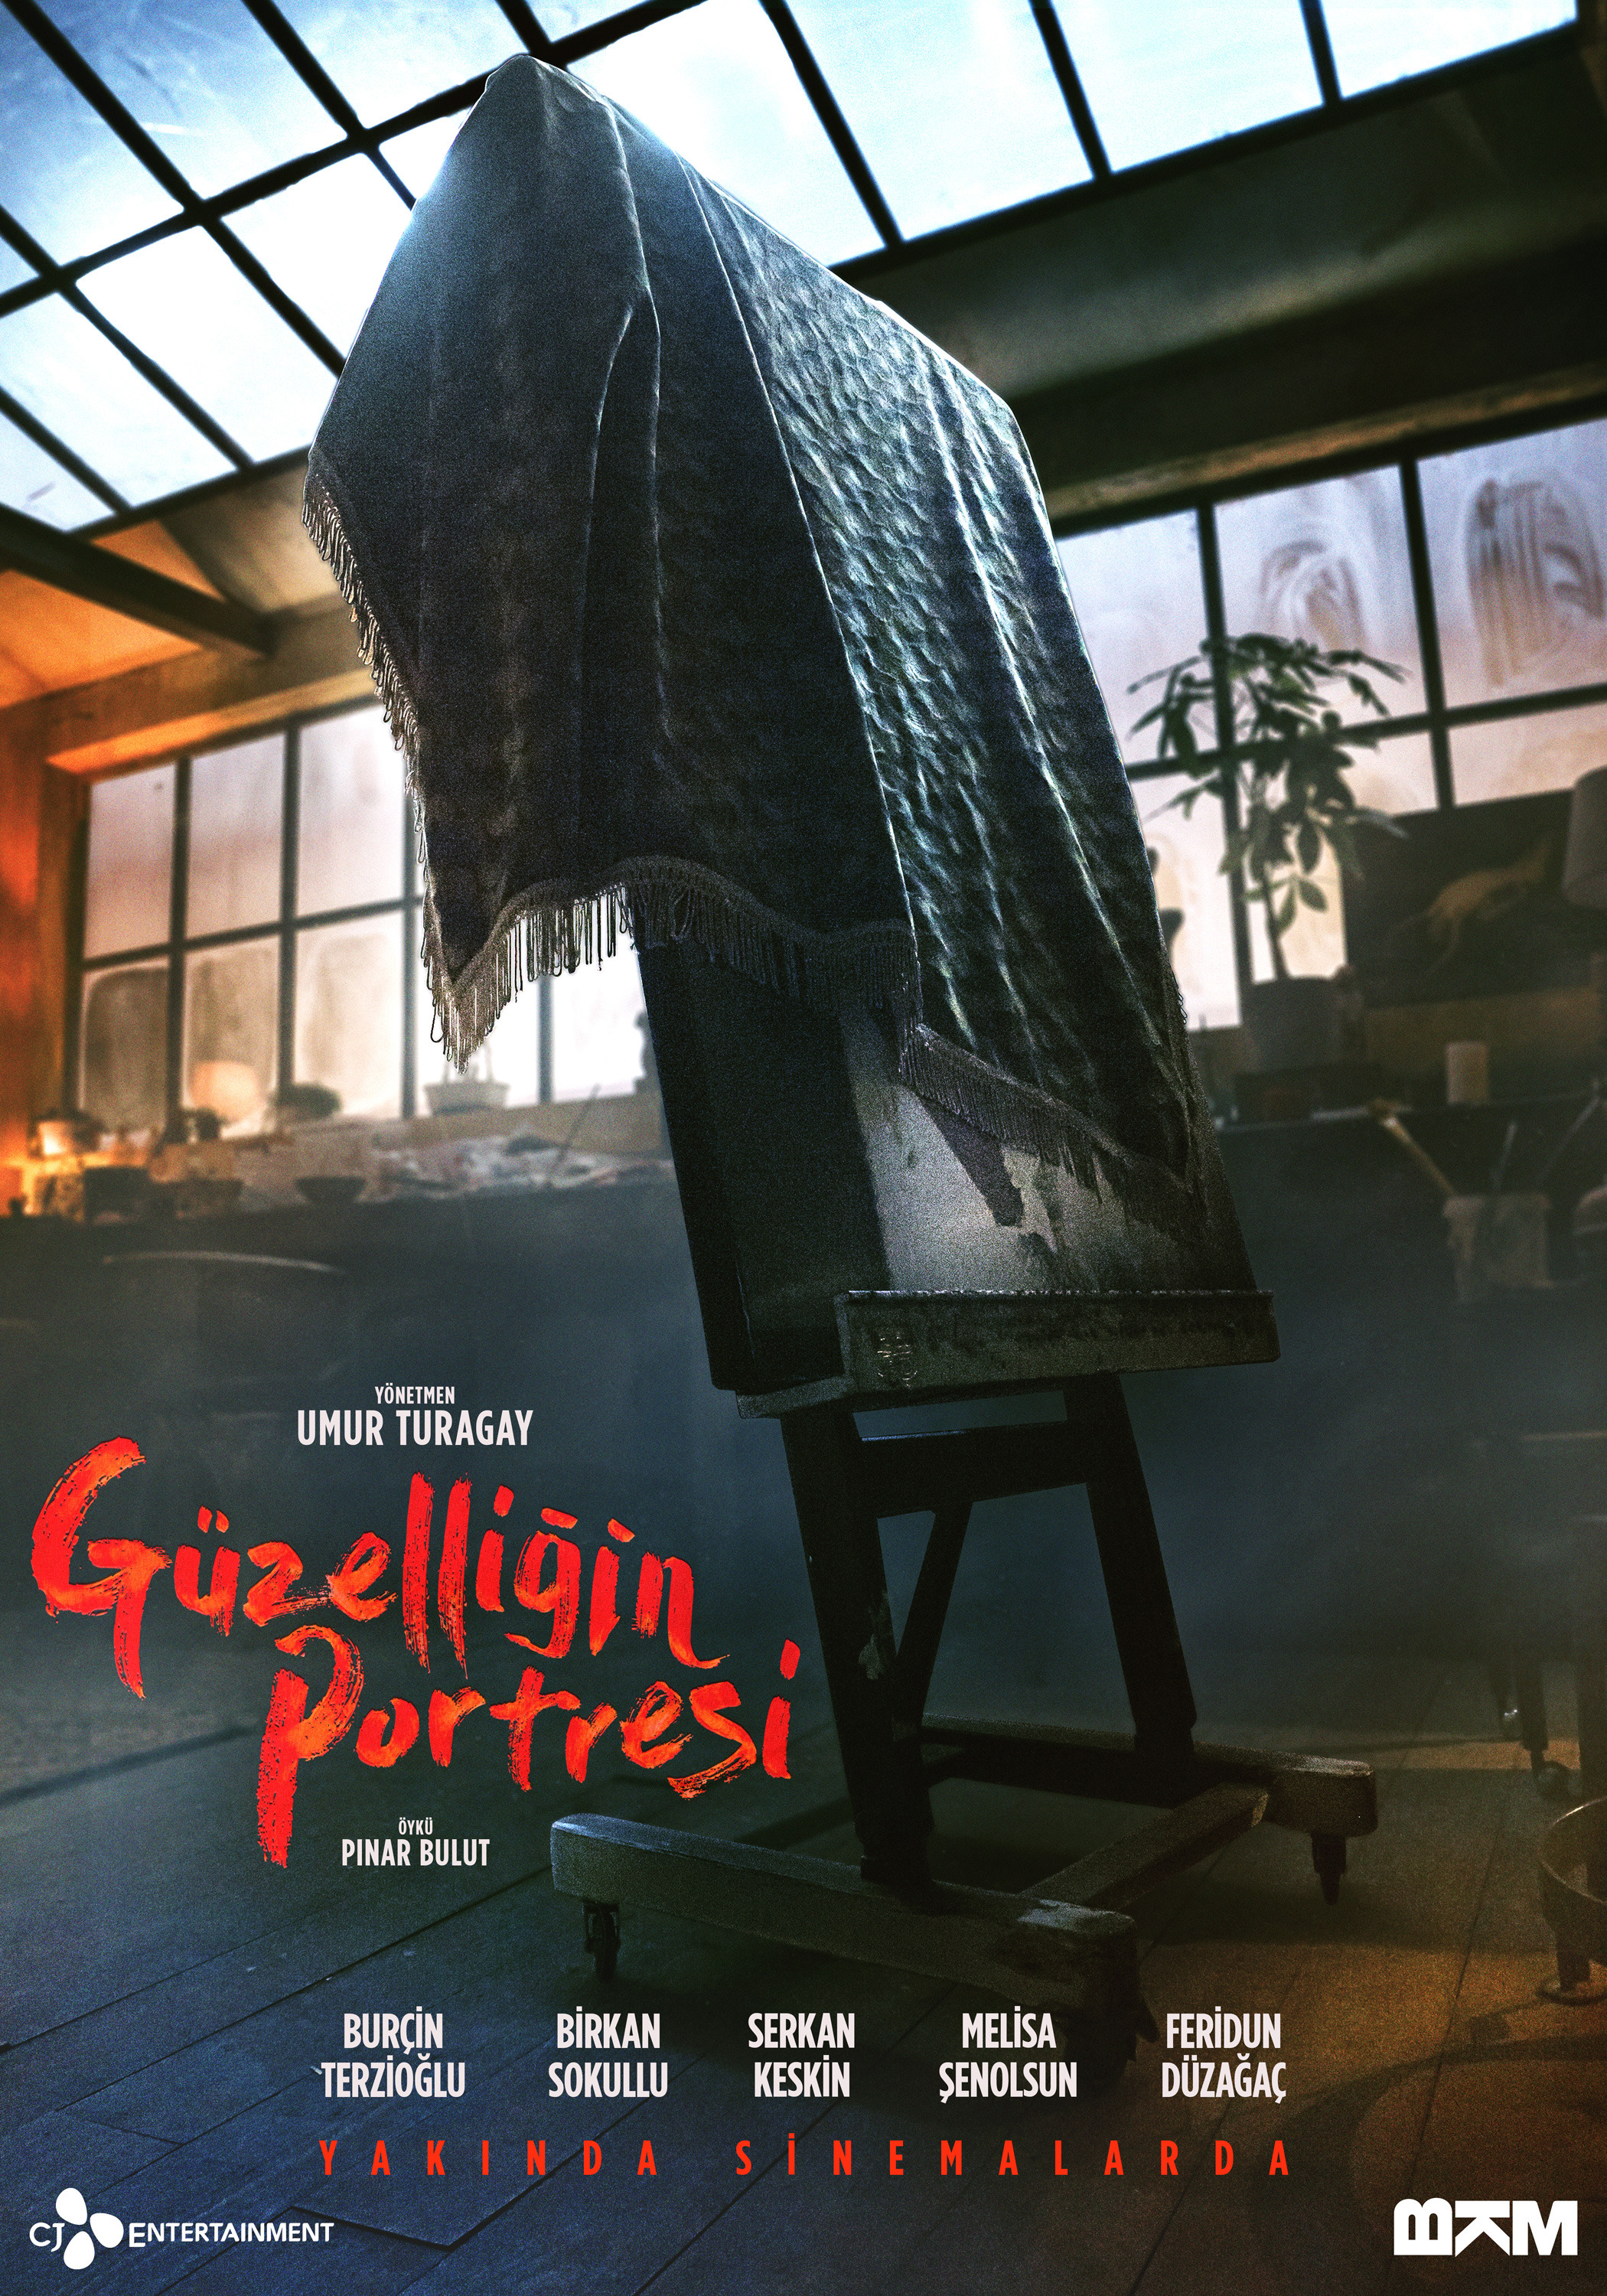 Mega Sized Movie Poster Image for Güzelligin Portresi (#1 of 8)